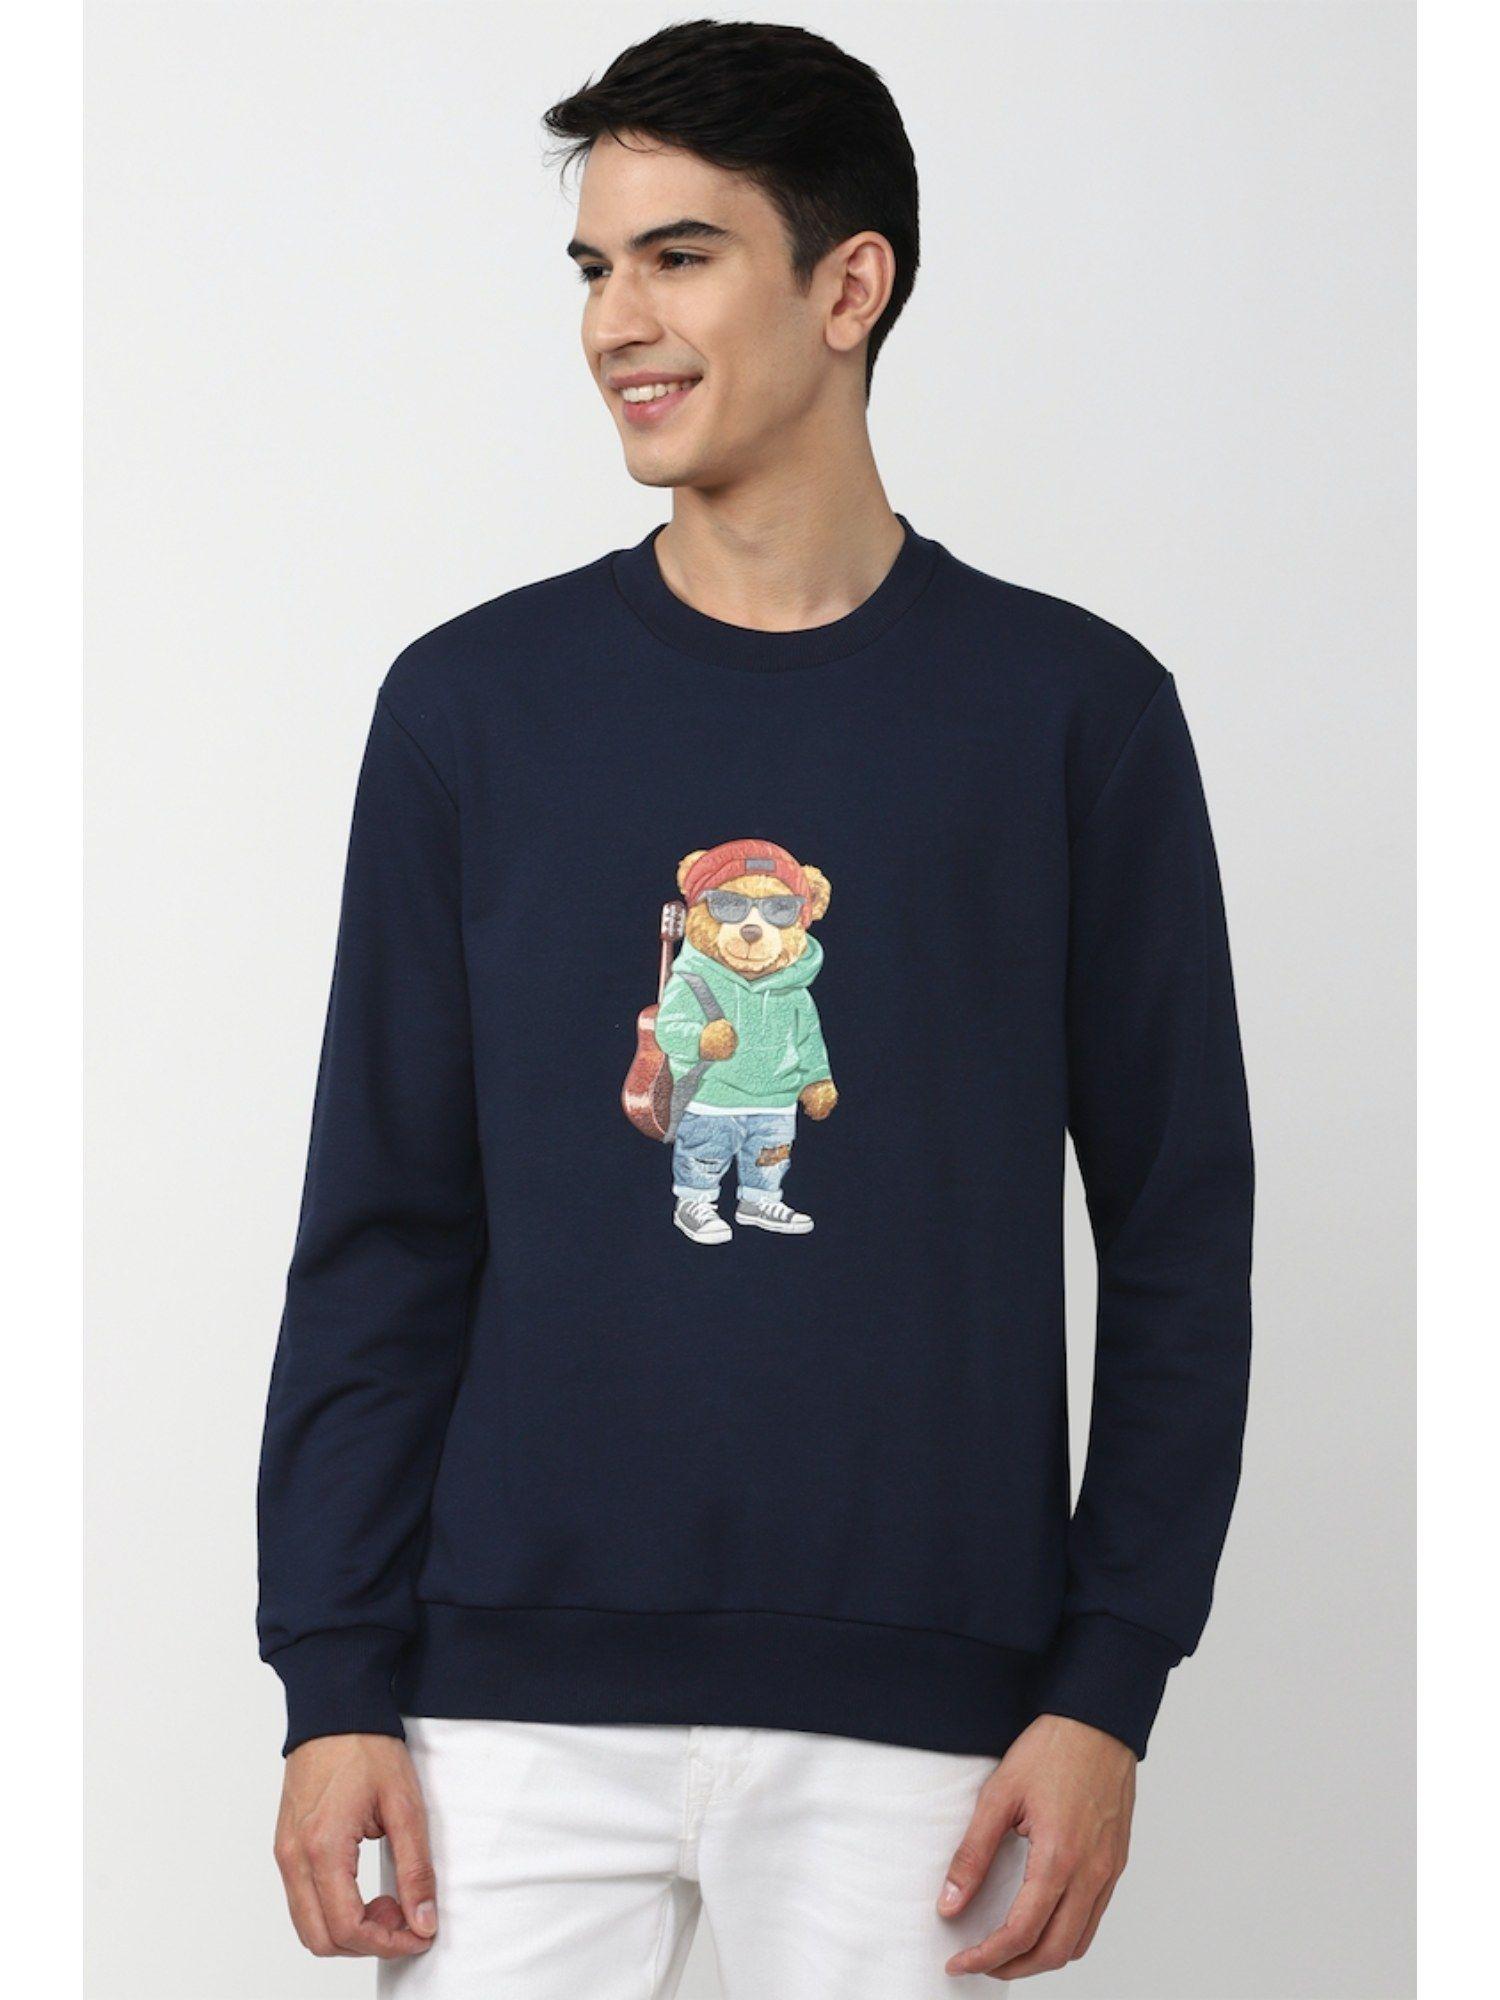 graphic sweatshirt in navy blue